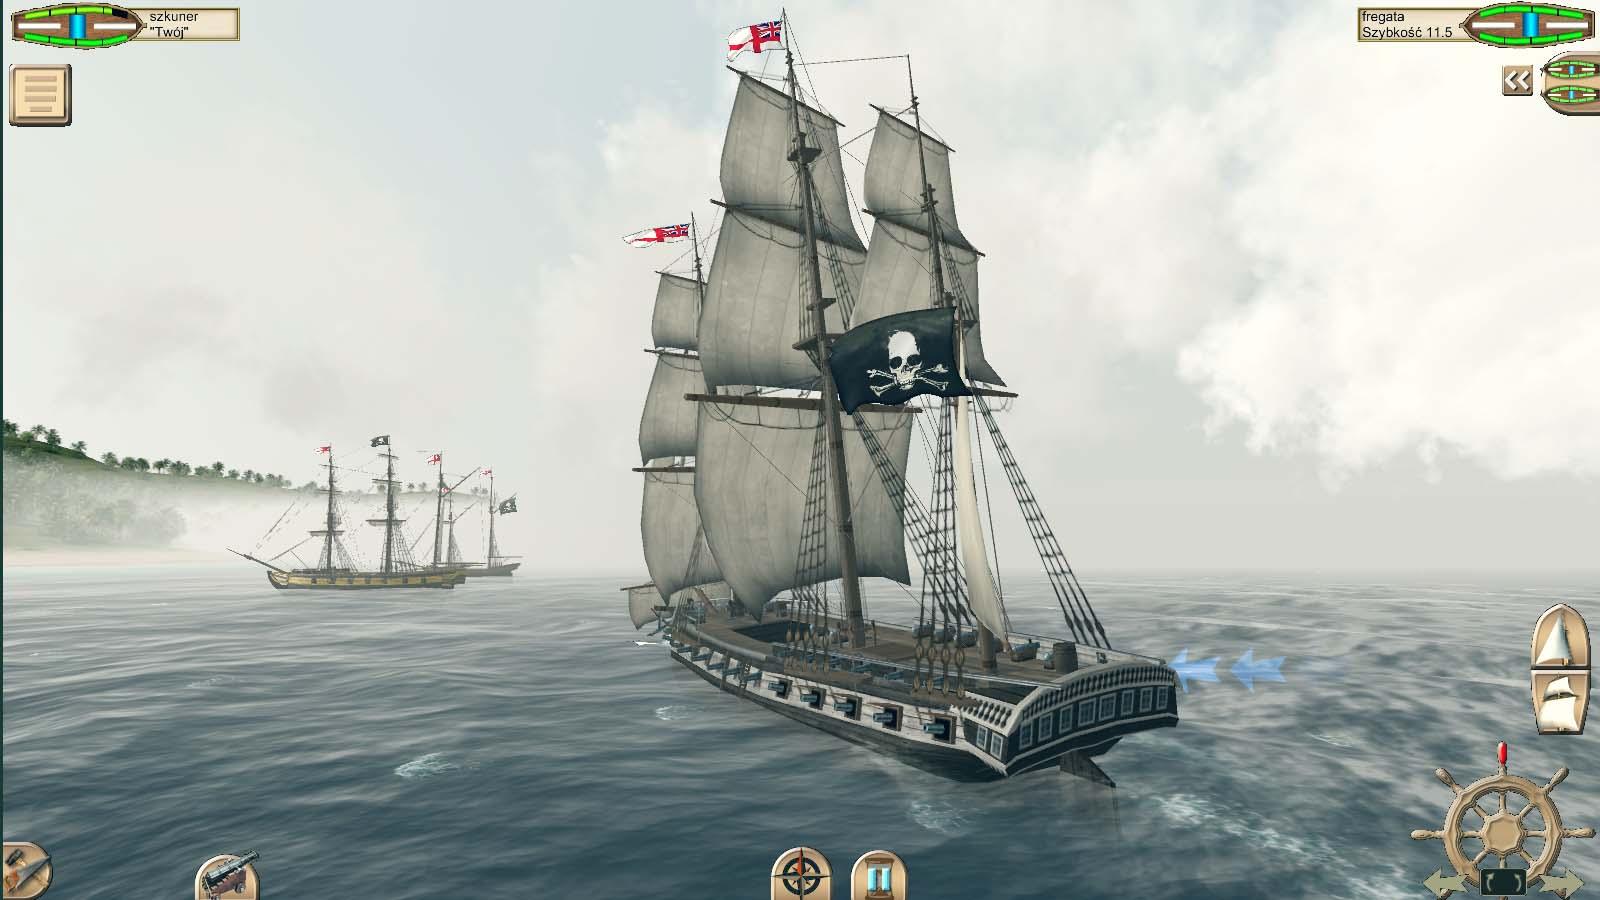 The Pirate Caribbean Hunt v5.6 Apk Mod Unlimited Money